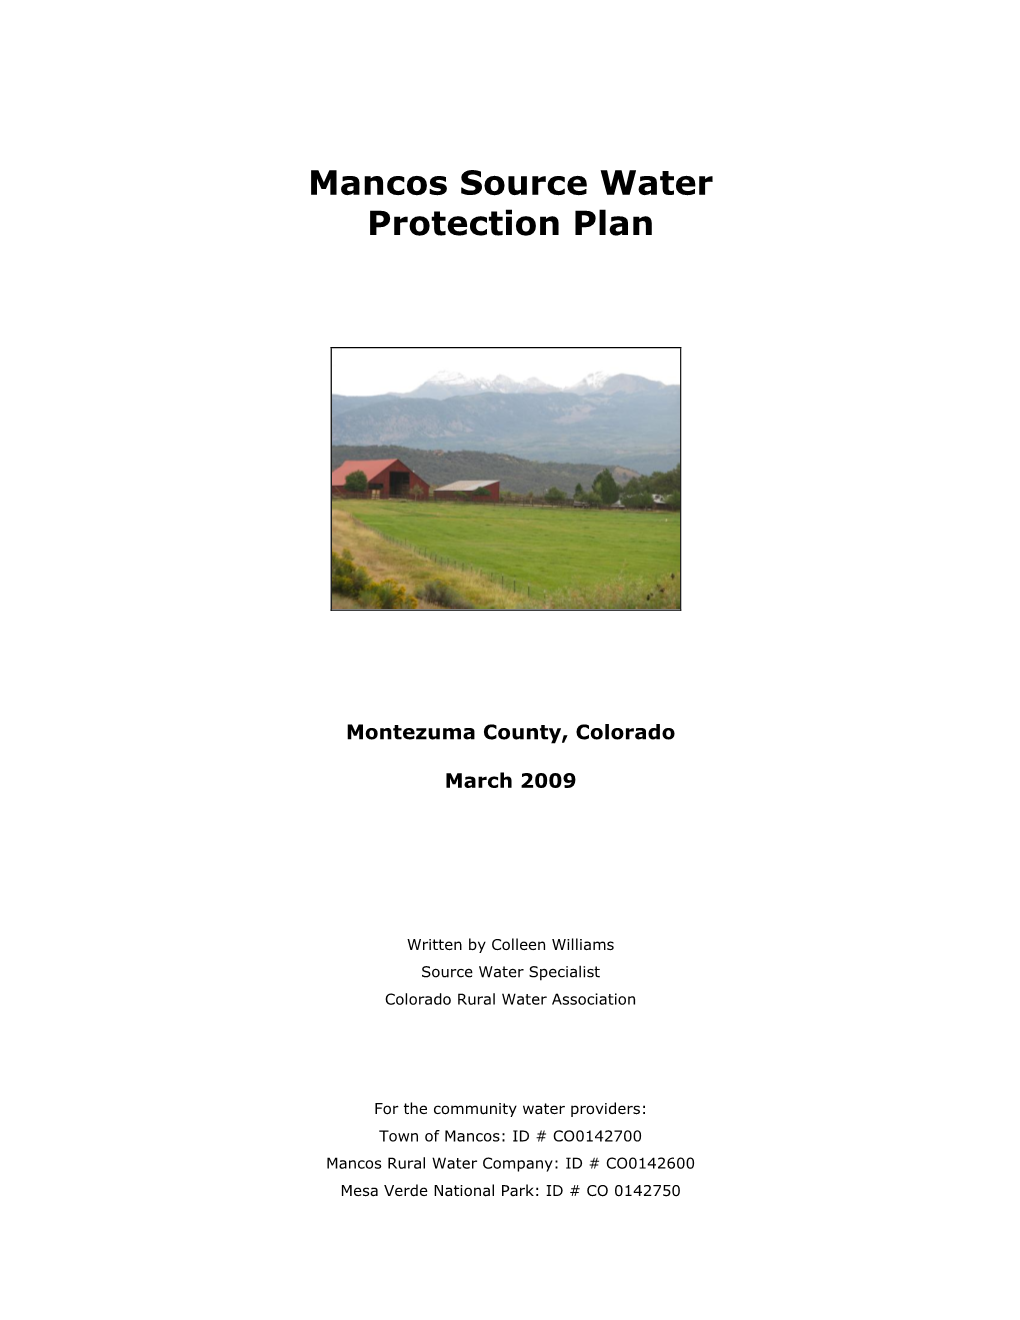 Mancos Source Water Protection Plan